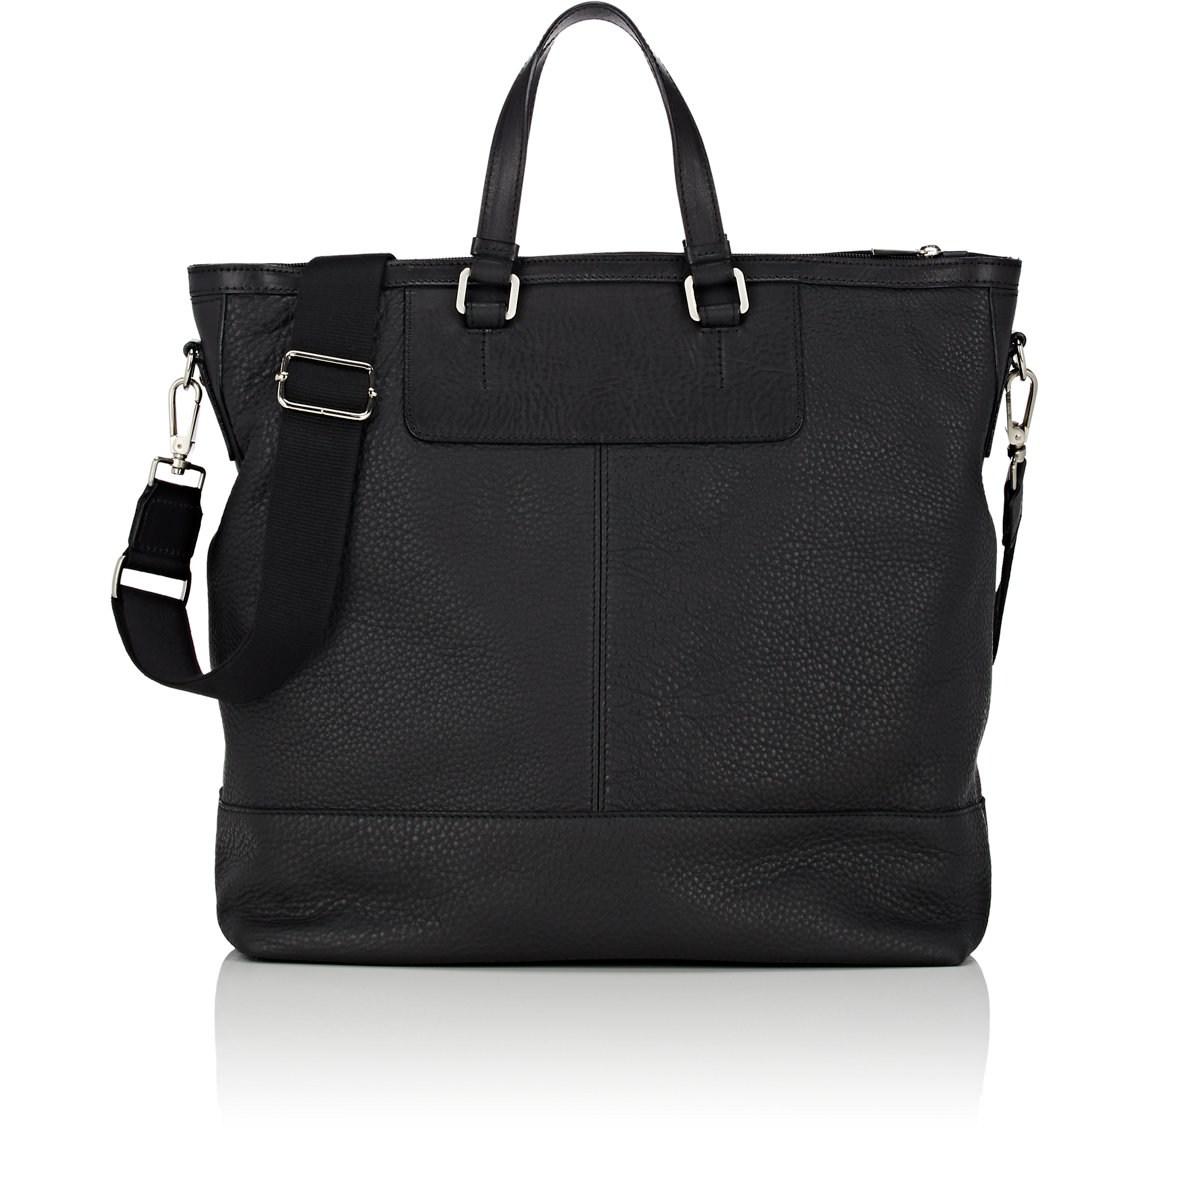 Barneys New York Leather Tote Bag in Black for Men - Lyst